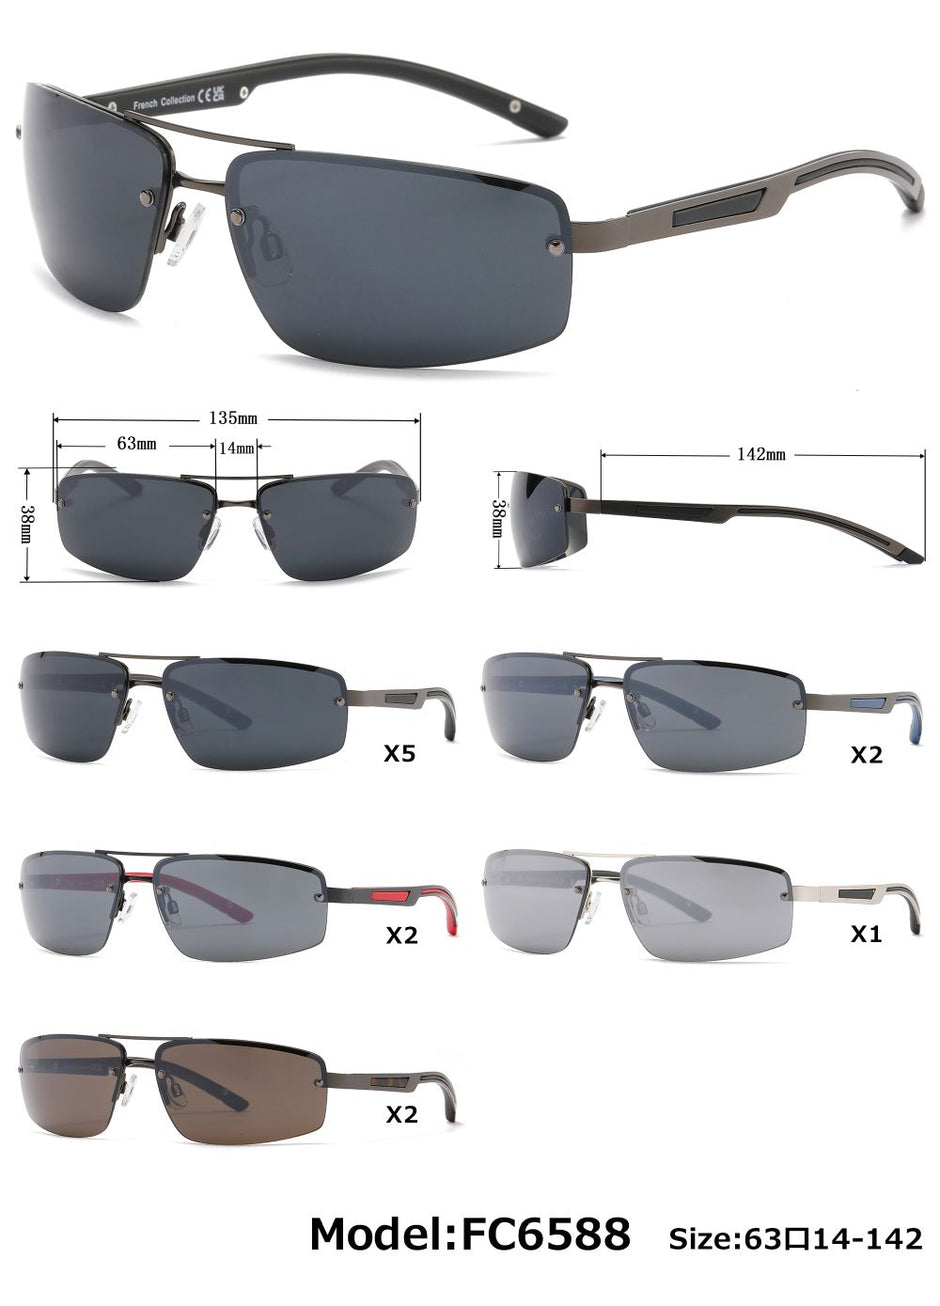 Wholesale Sunglasses | Sunglasses Distributor – Dynasol Eyewear